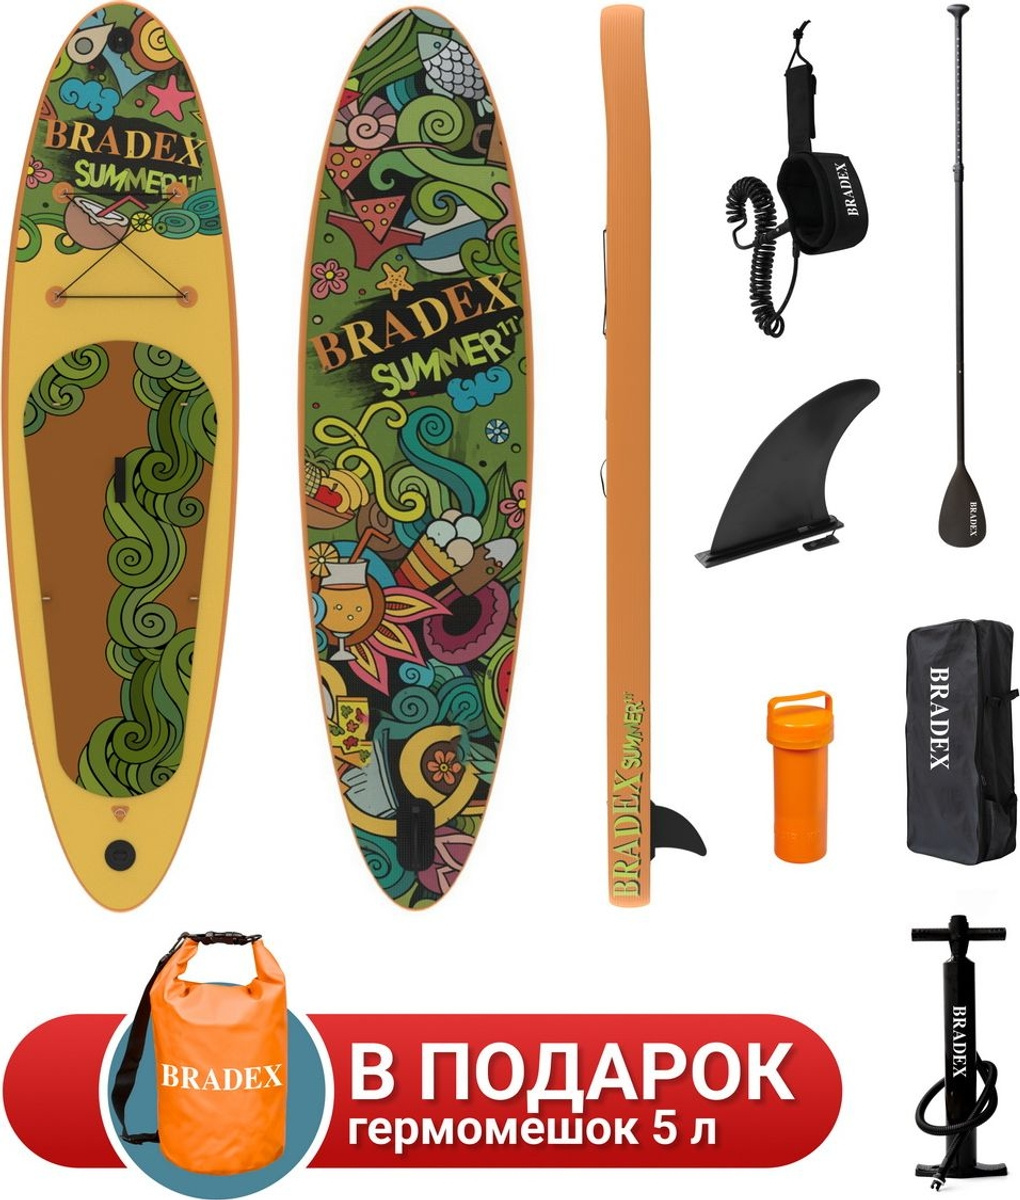 Bradex Bradex Summer 11’ из каталога транспорт в Санкт-Петербурге по цене 33590 ₽